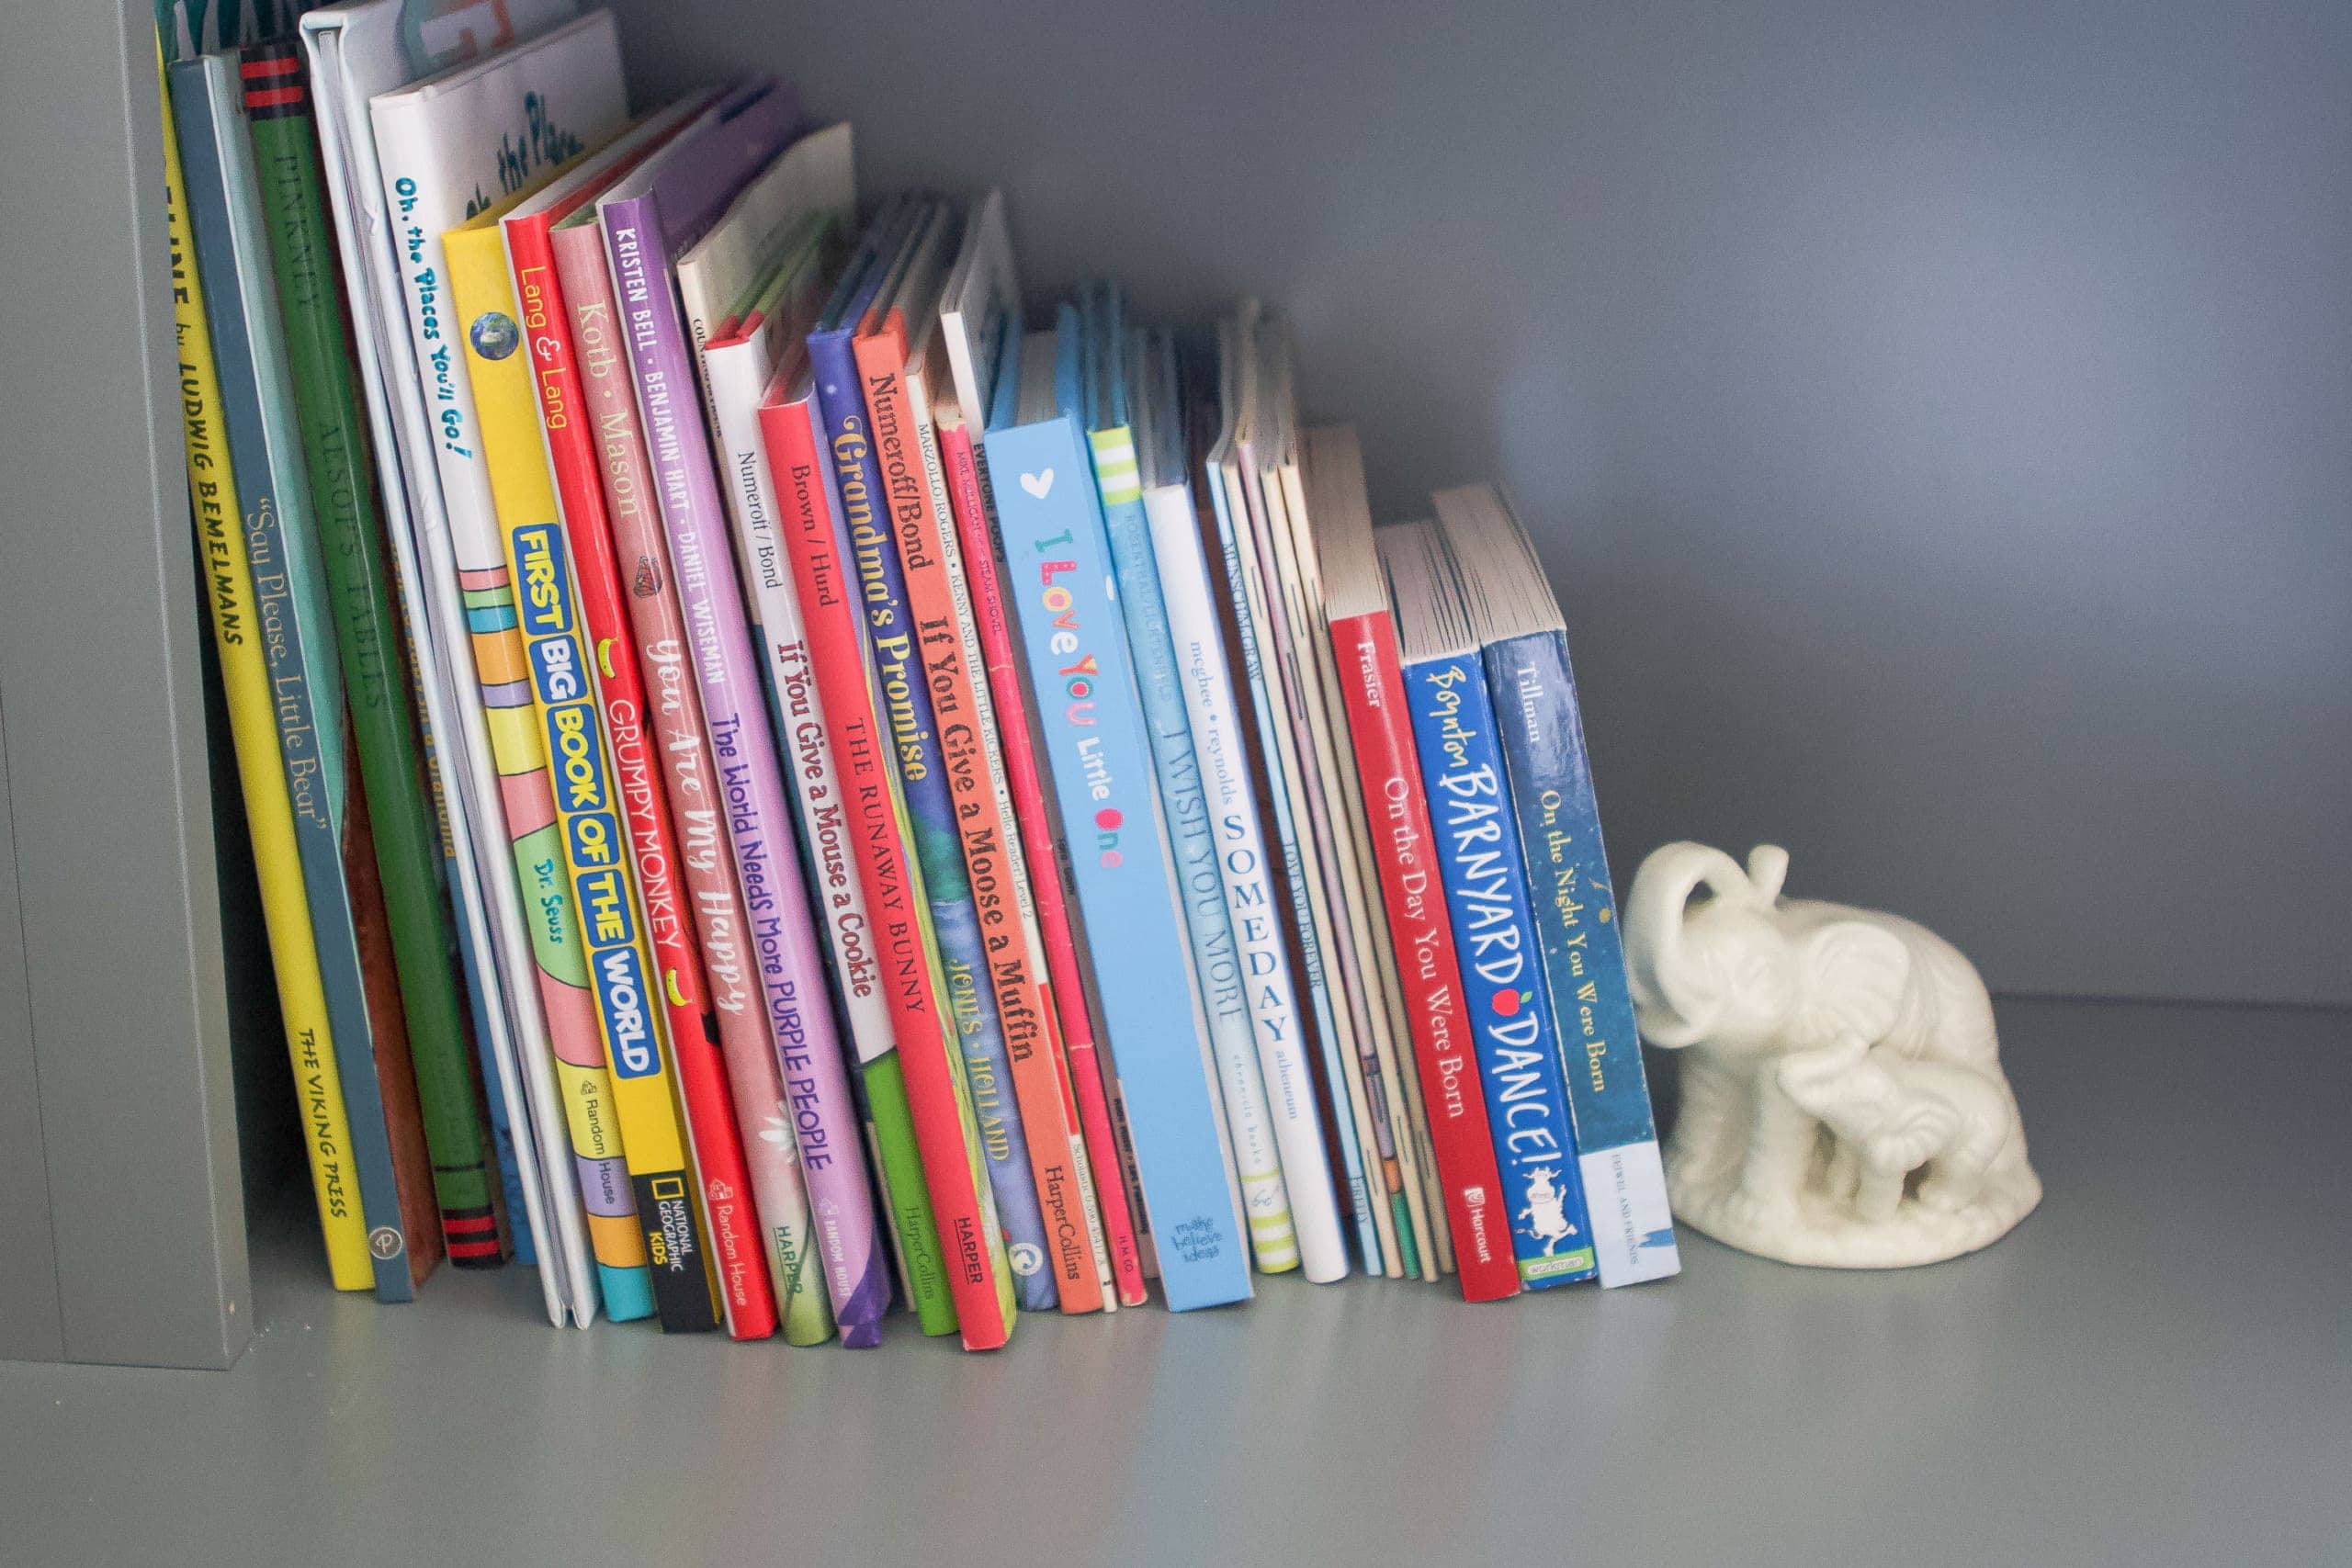 Display books both horizontally and vertically on nursery shelves